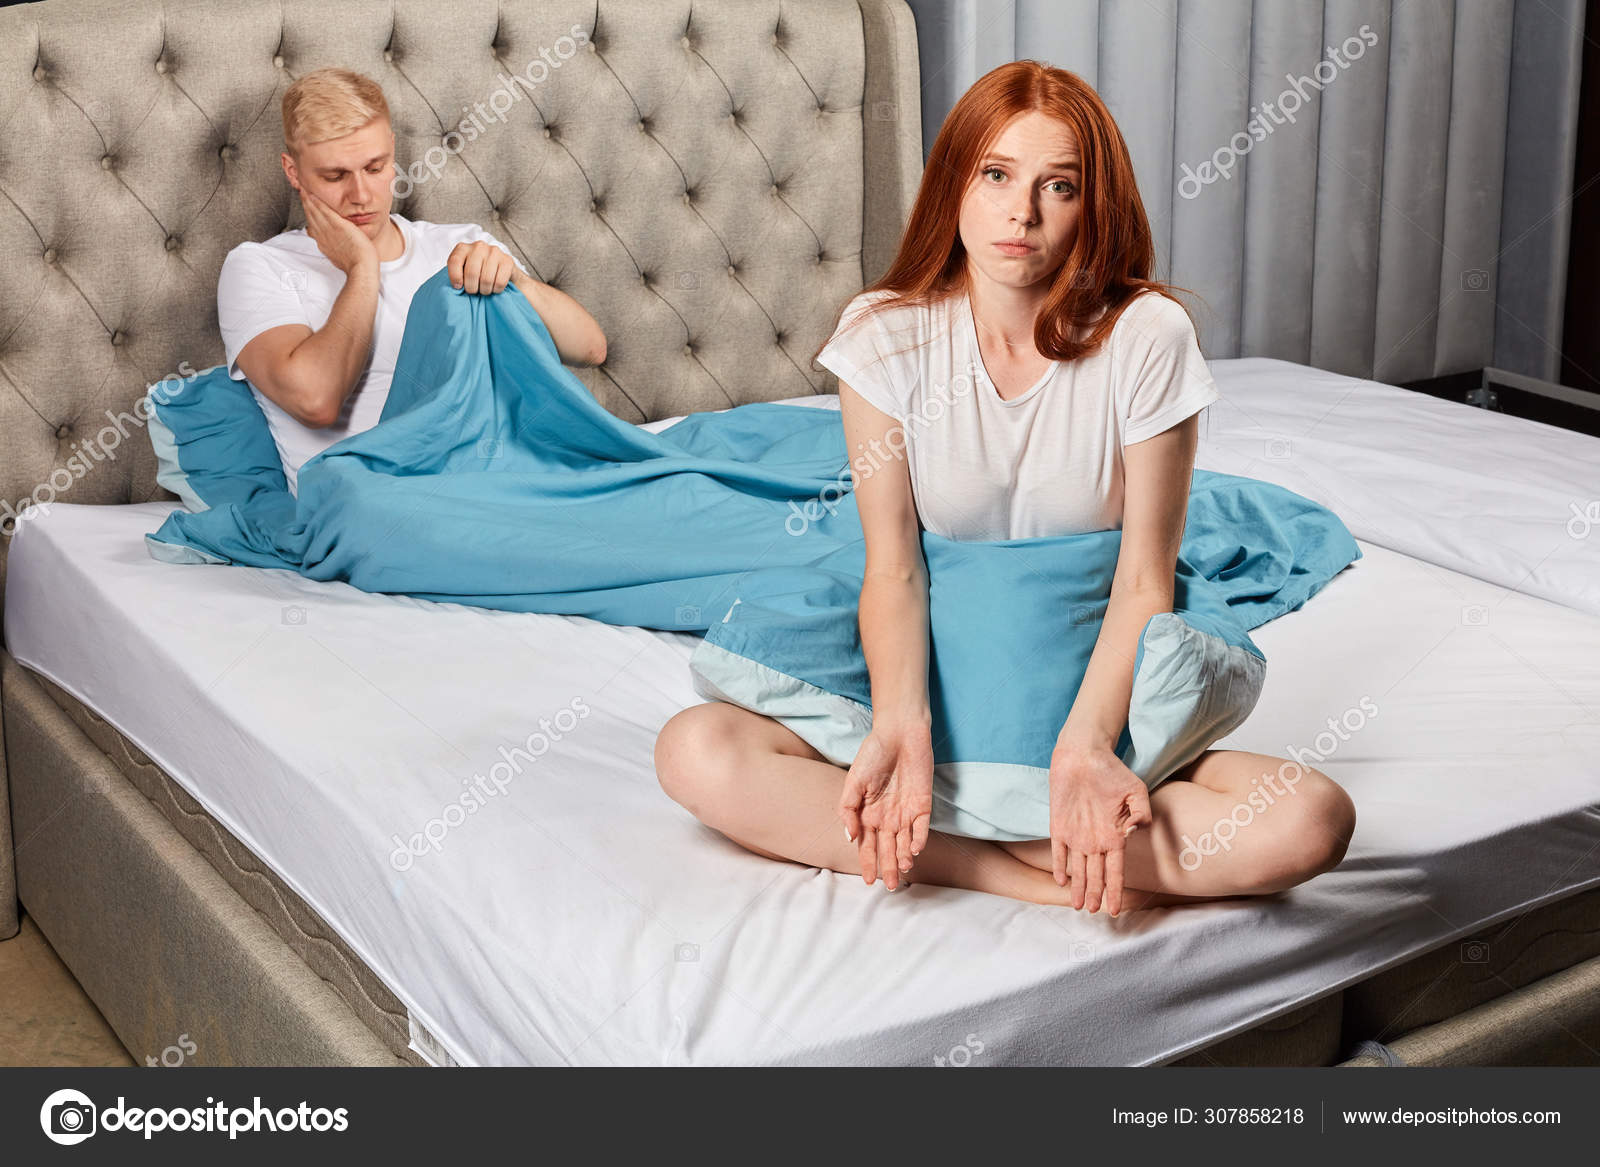 girlfriend in bedroom with boy cock Porn Pics Hd